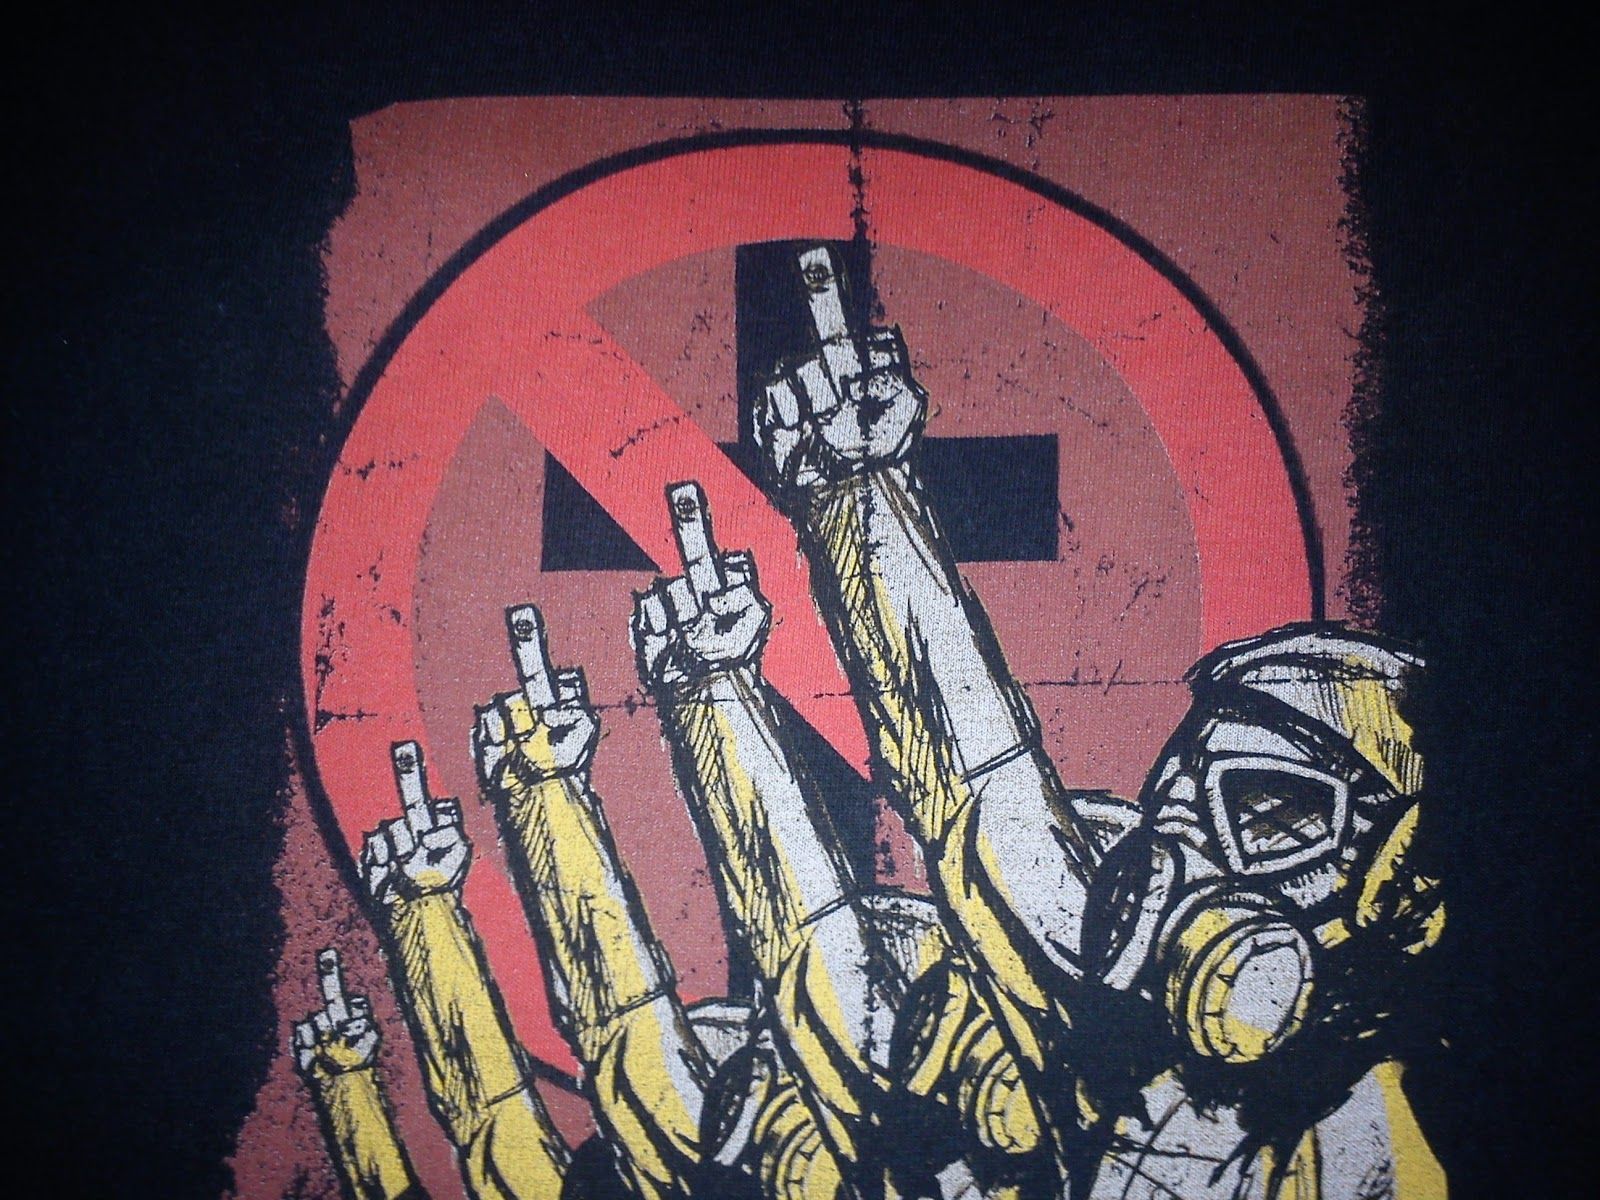 Jerau's Territory X Wishlists: (WL-1540) Bad Religion Band T-Shirt